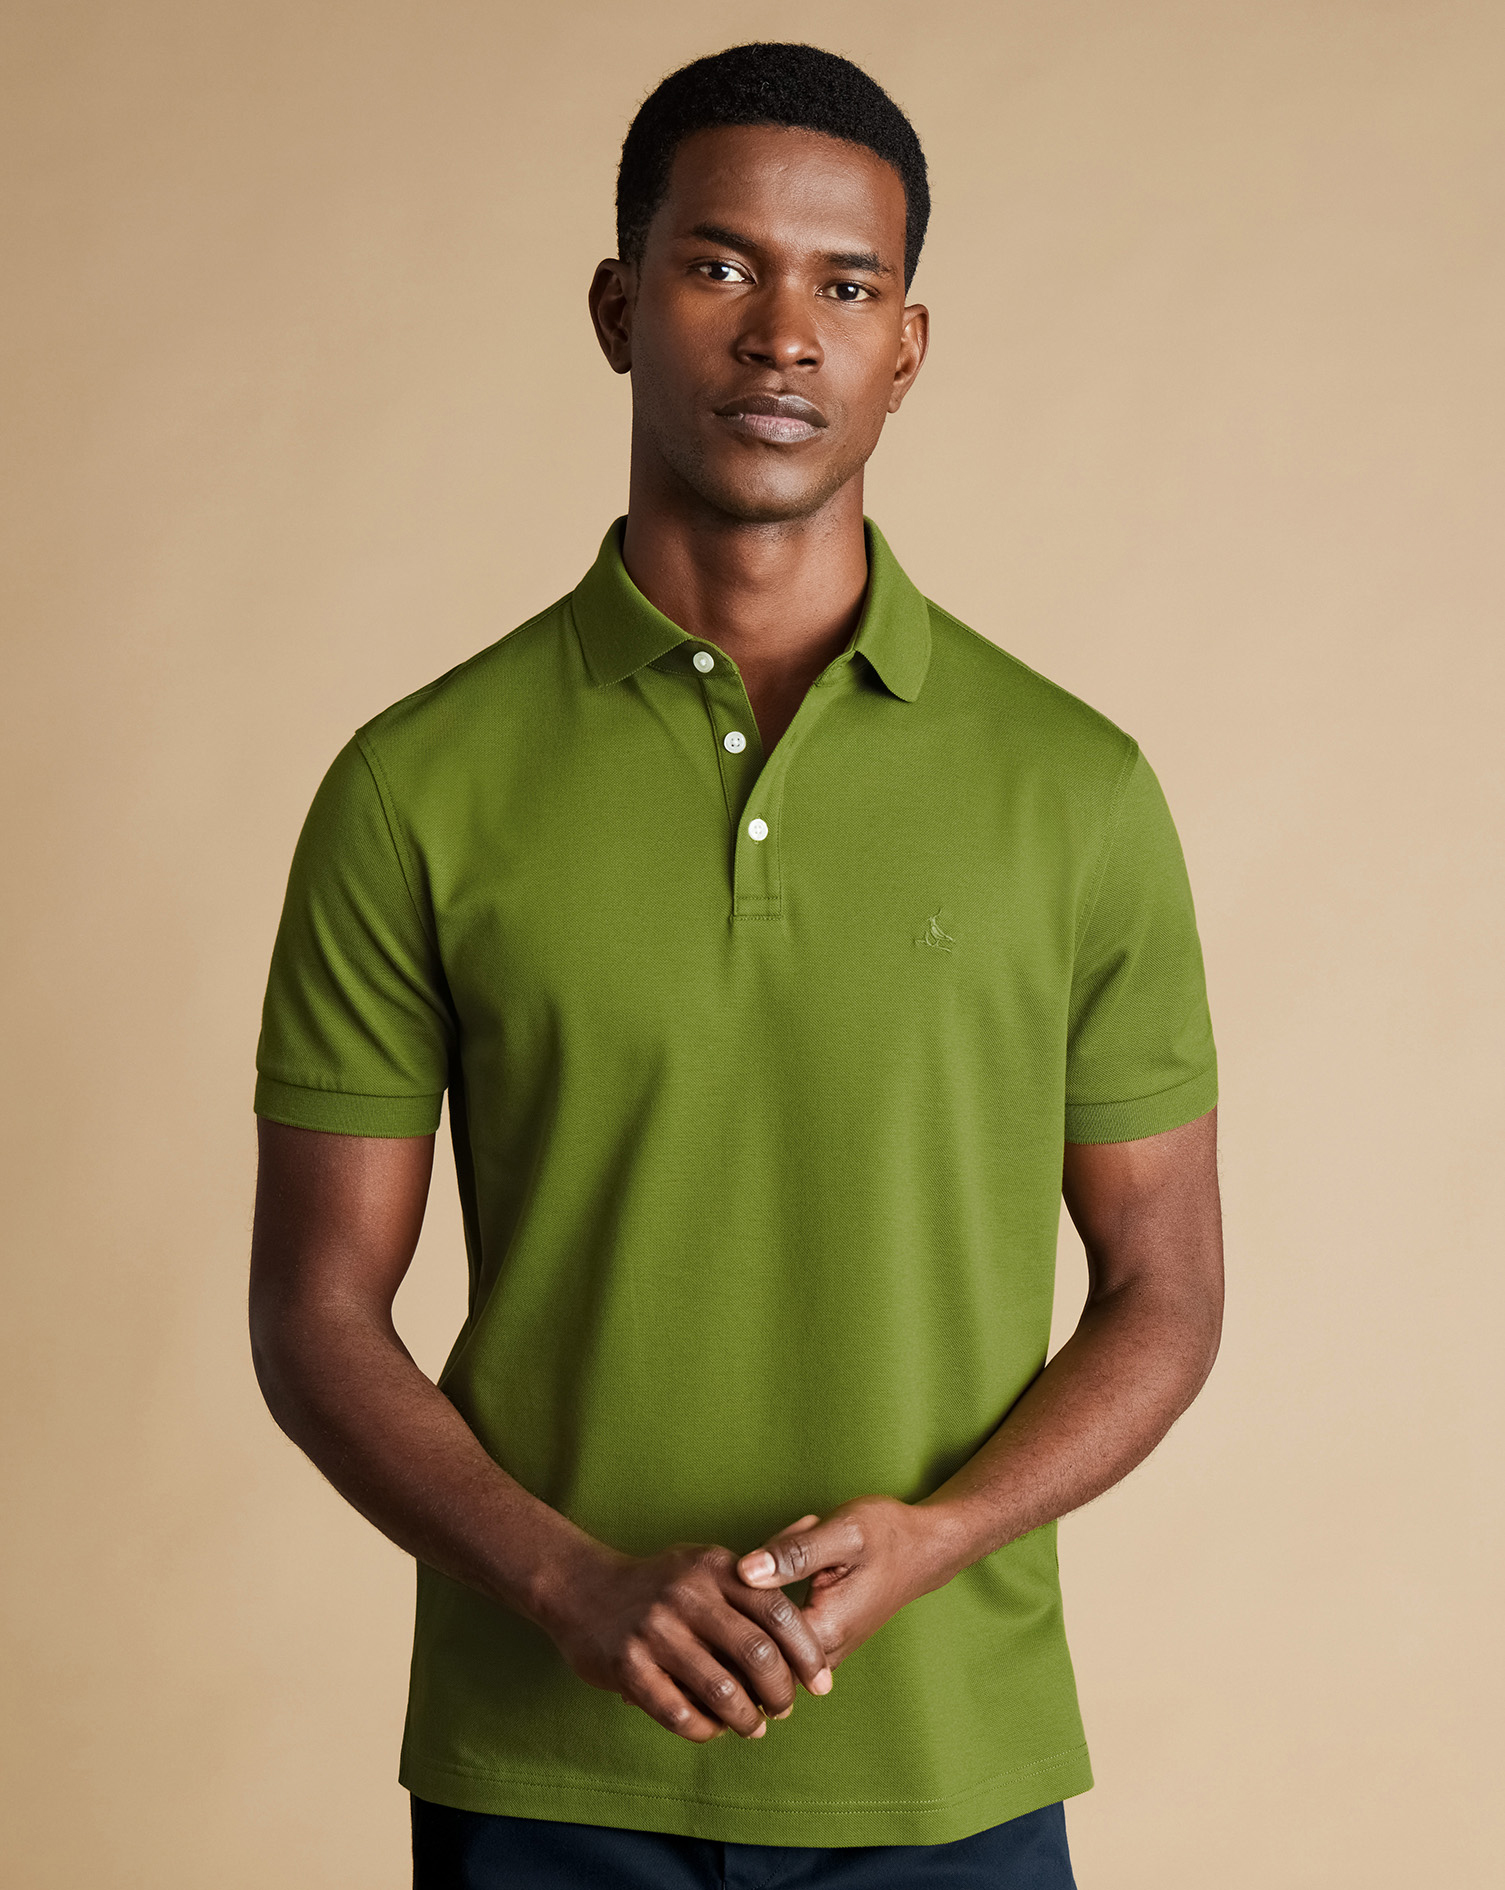 Men's Charles Tyrwhitt Pique Polo Shirt - Bright Green Size Small Cotton
